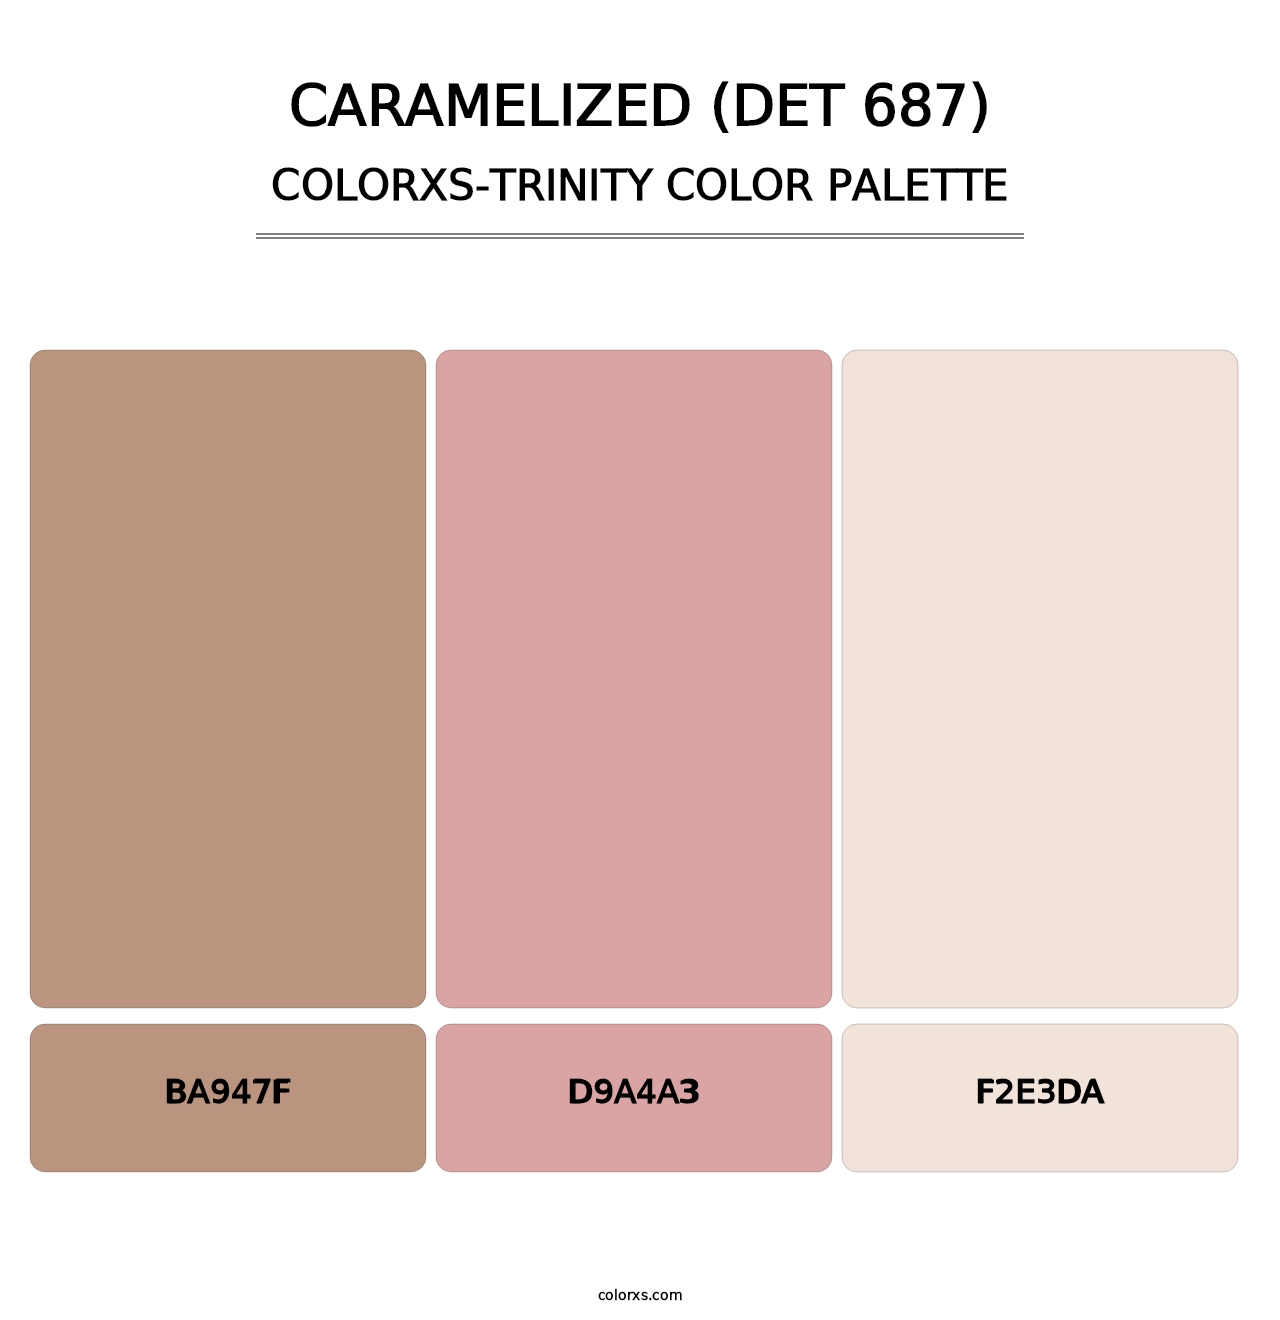 Caramelized (DET 687) - Colorxs Trinity Palette